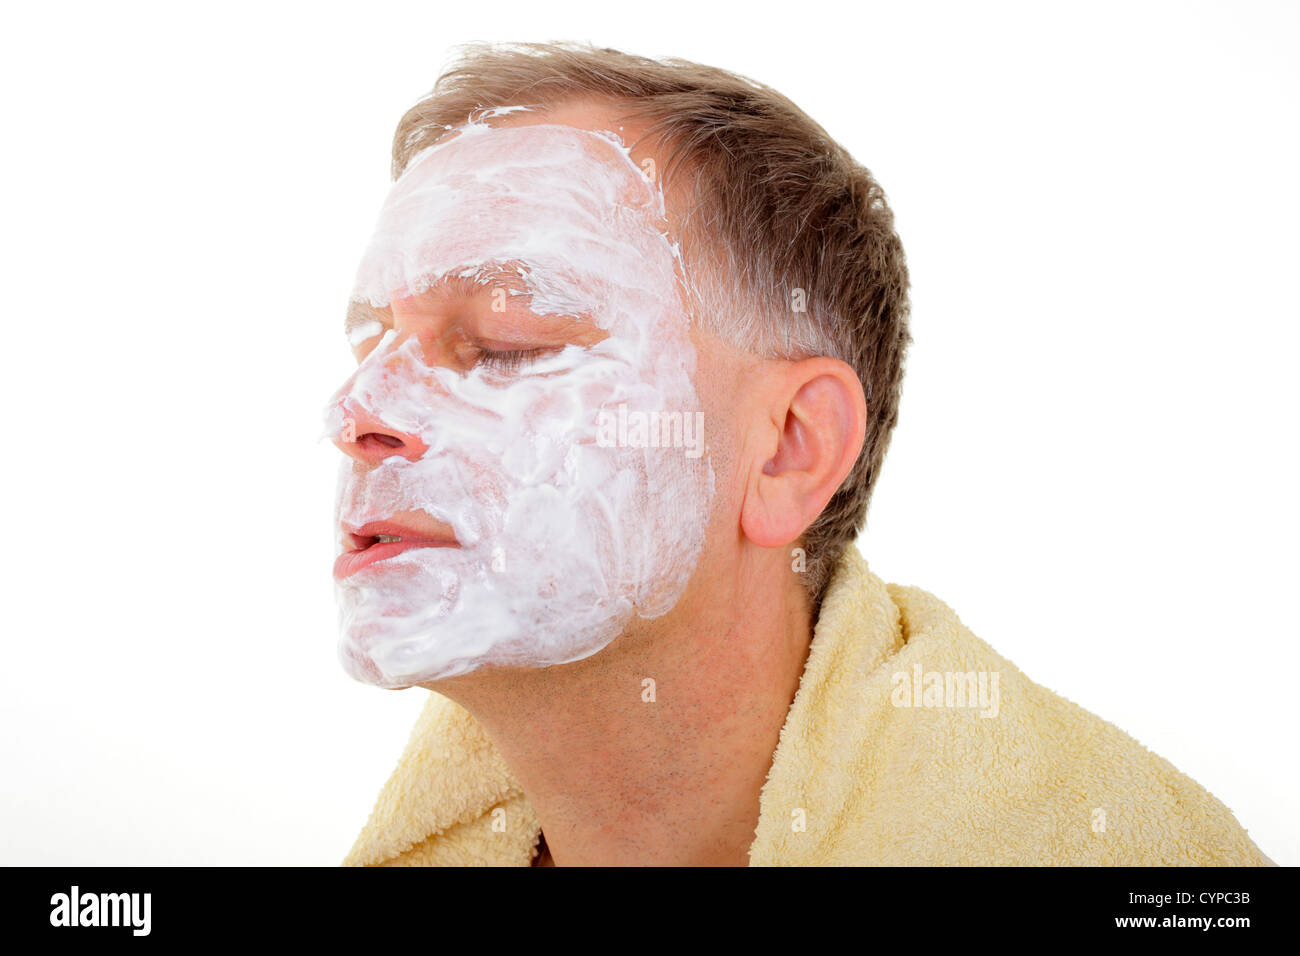 man with facial mask Stock Photo